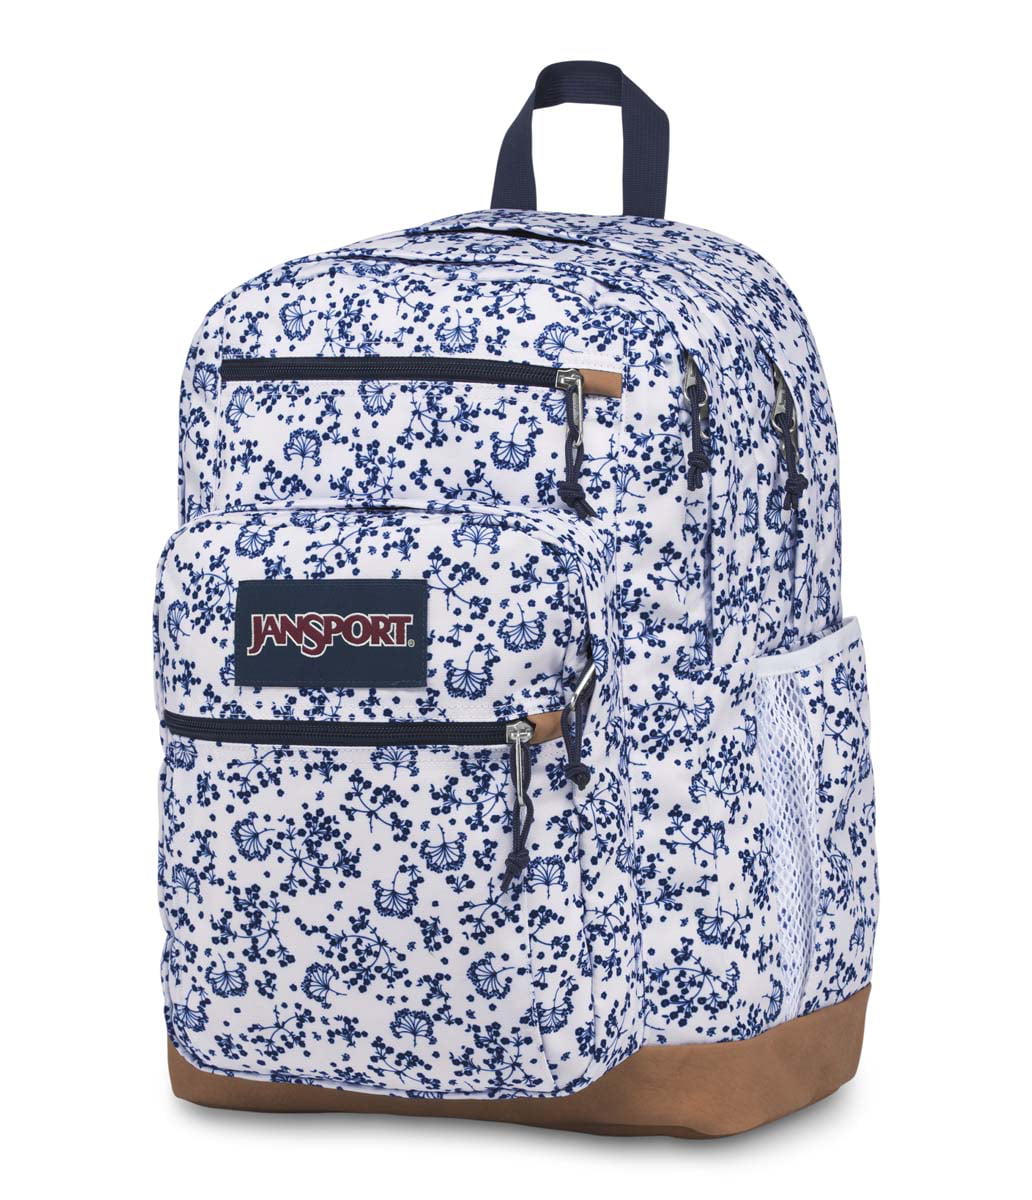 jansport blue and white floral backpack